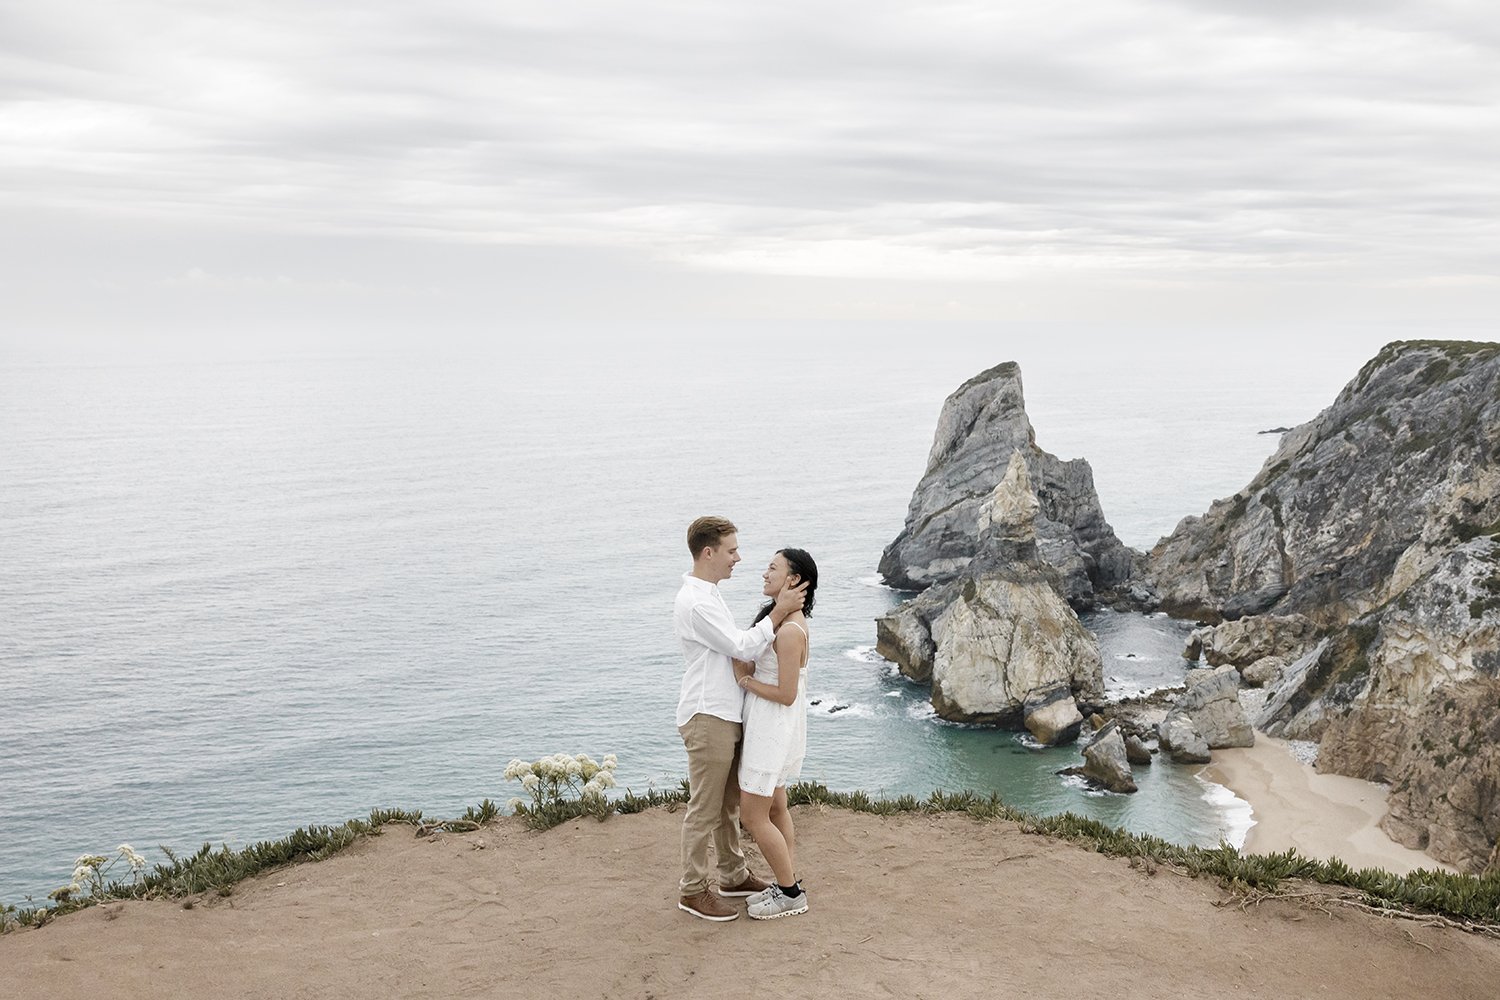 surprise-wedding-proposal-photographer-praia-da-ursa--sintra-terra-fotografia-flytographer-002.jpg